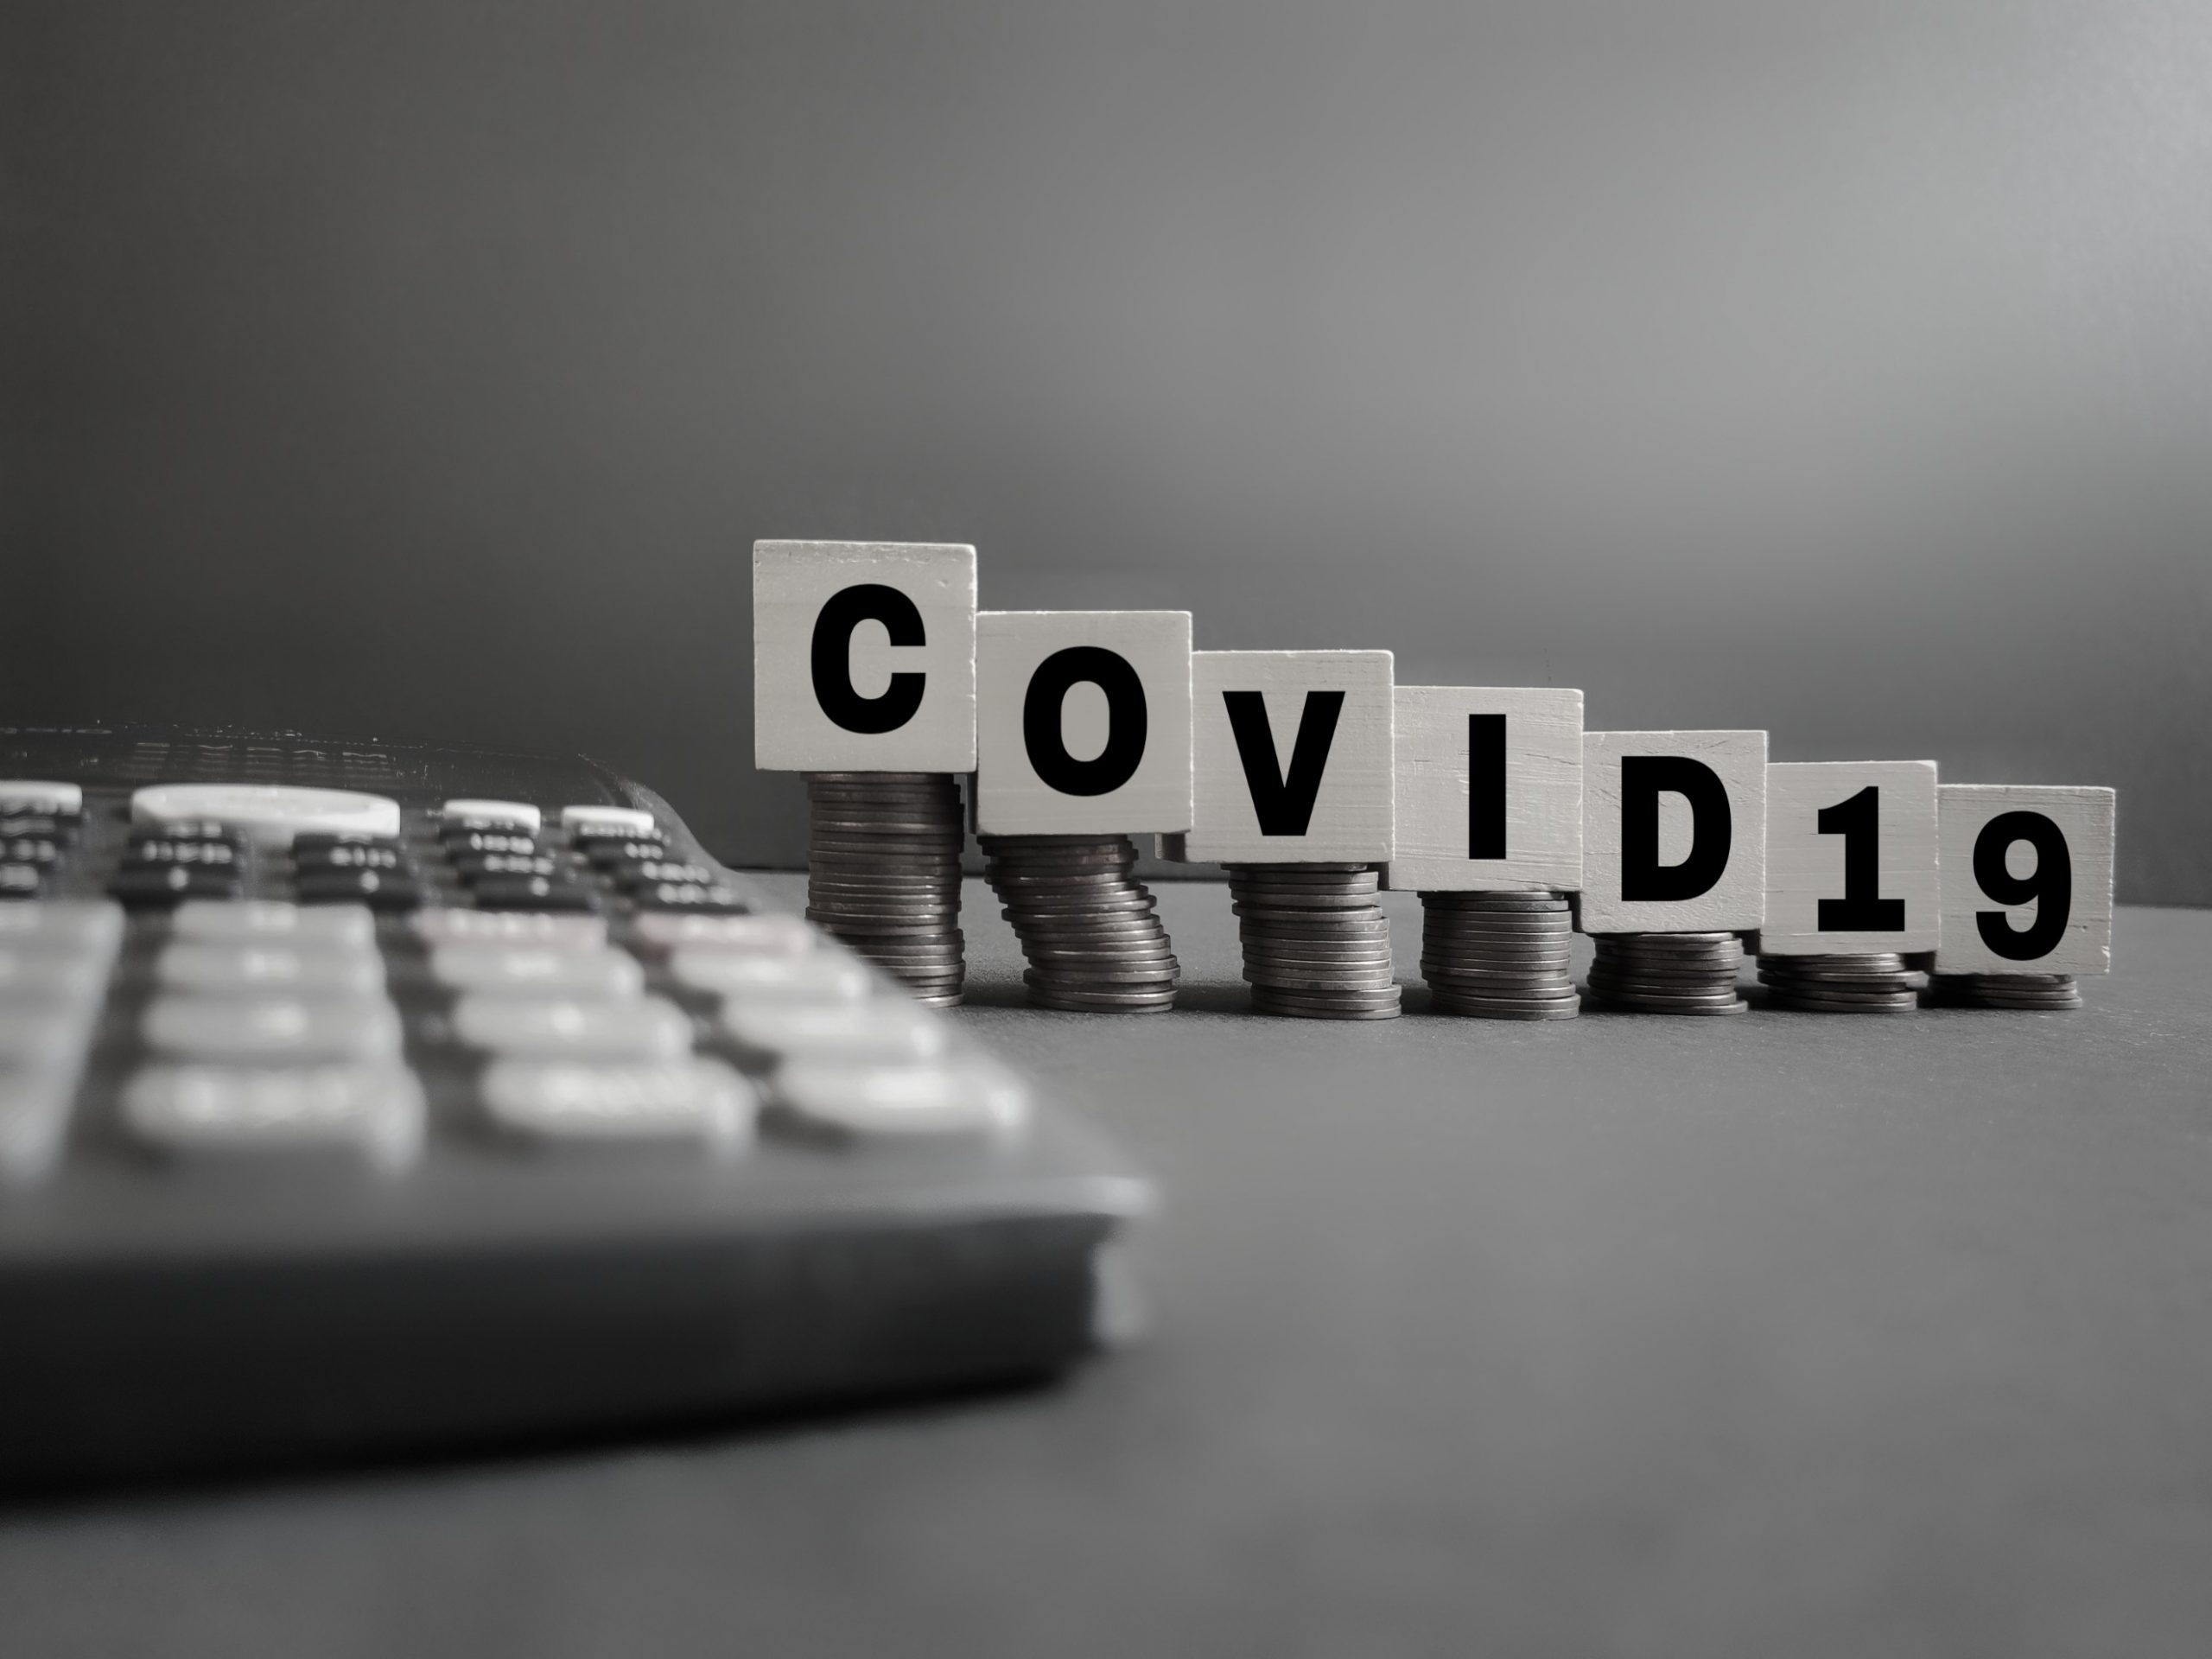 bani covid coronavirus pandemie